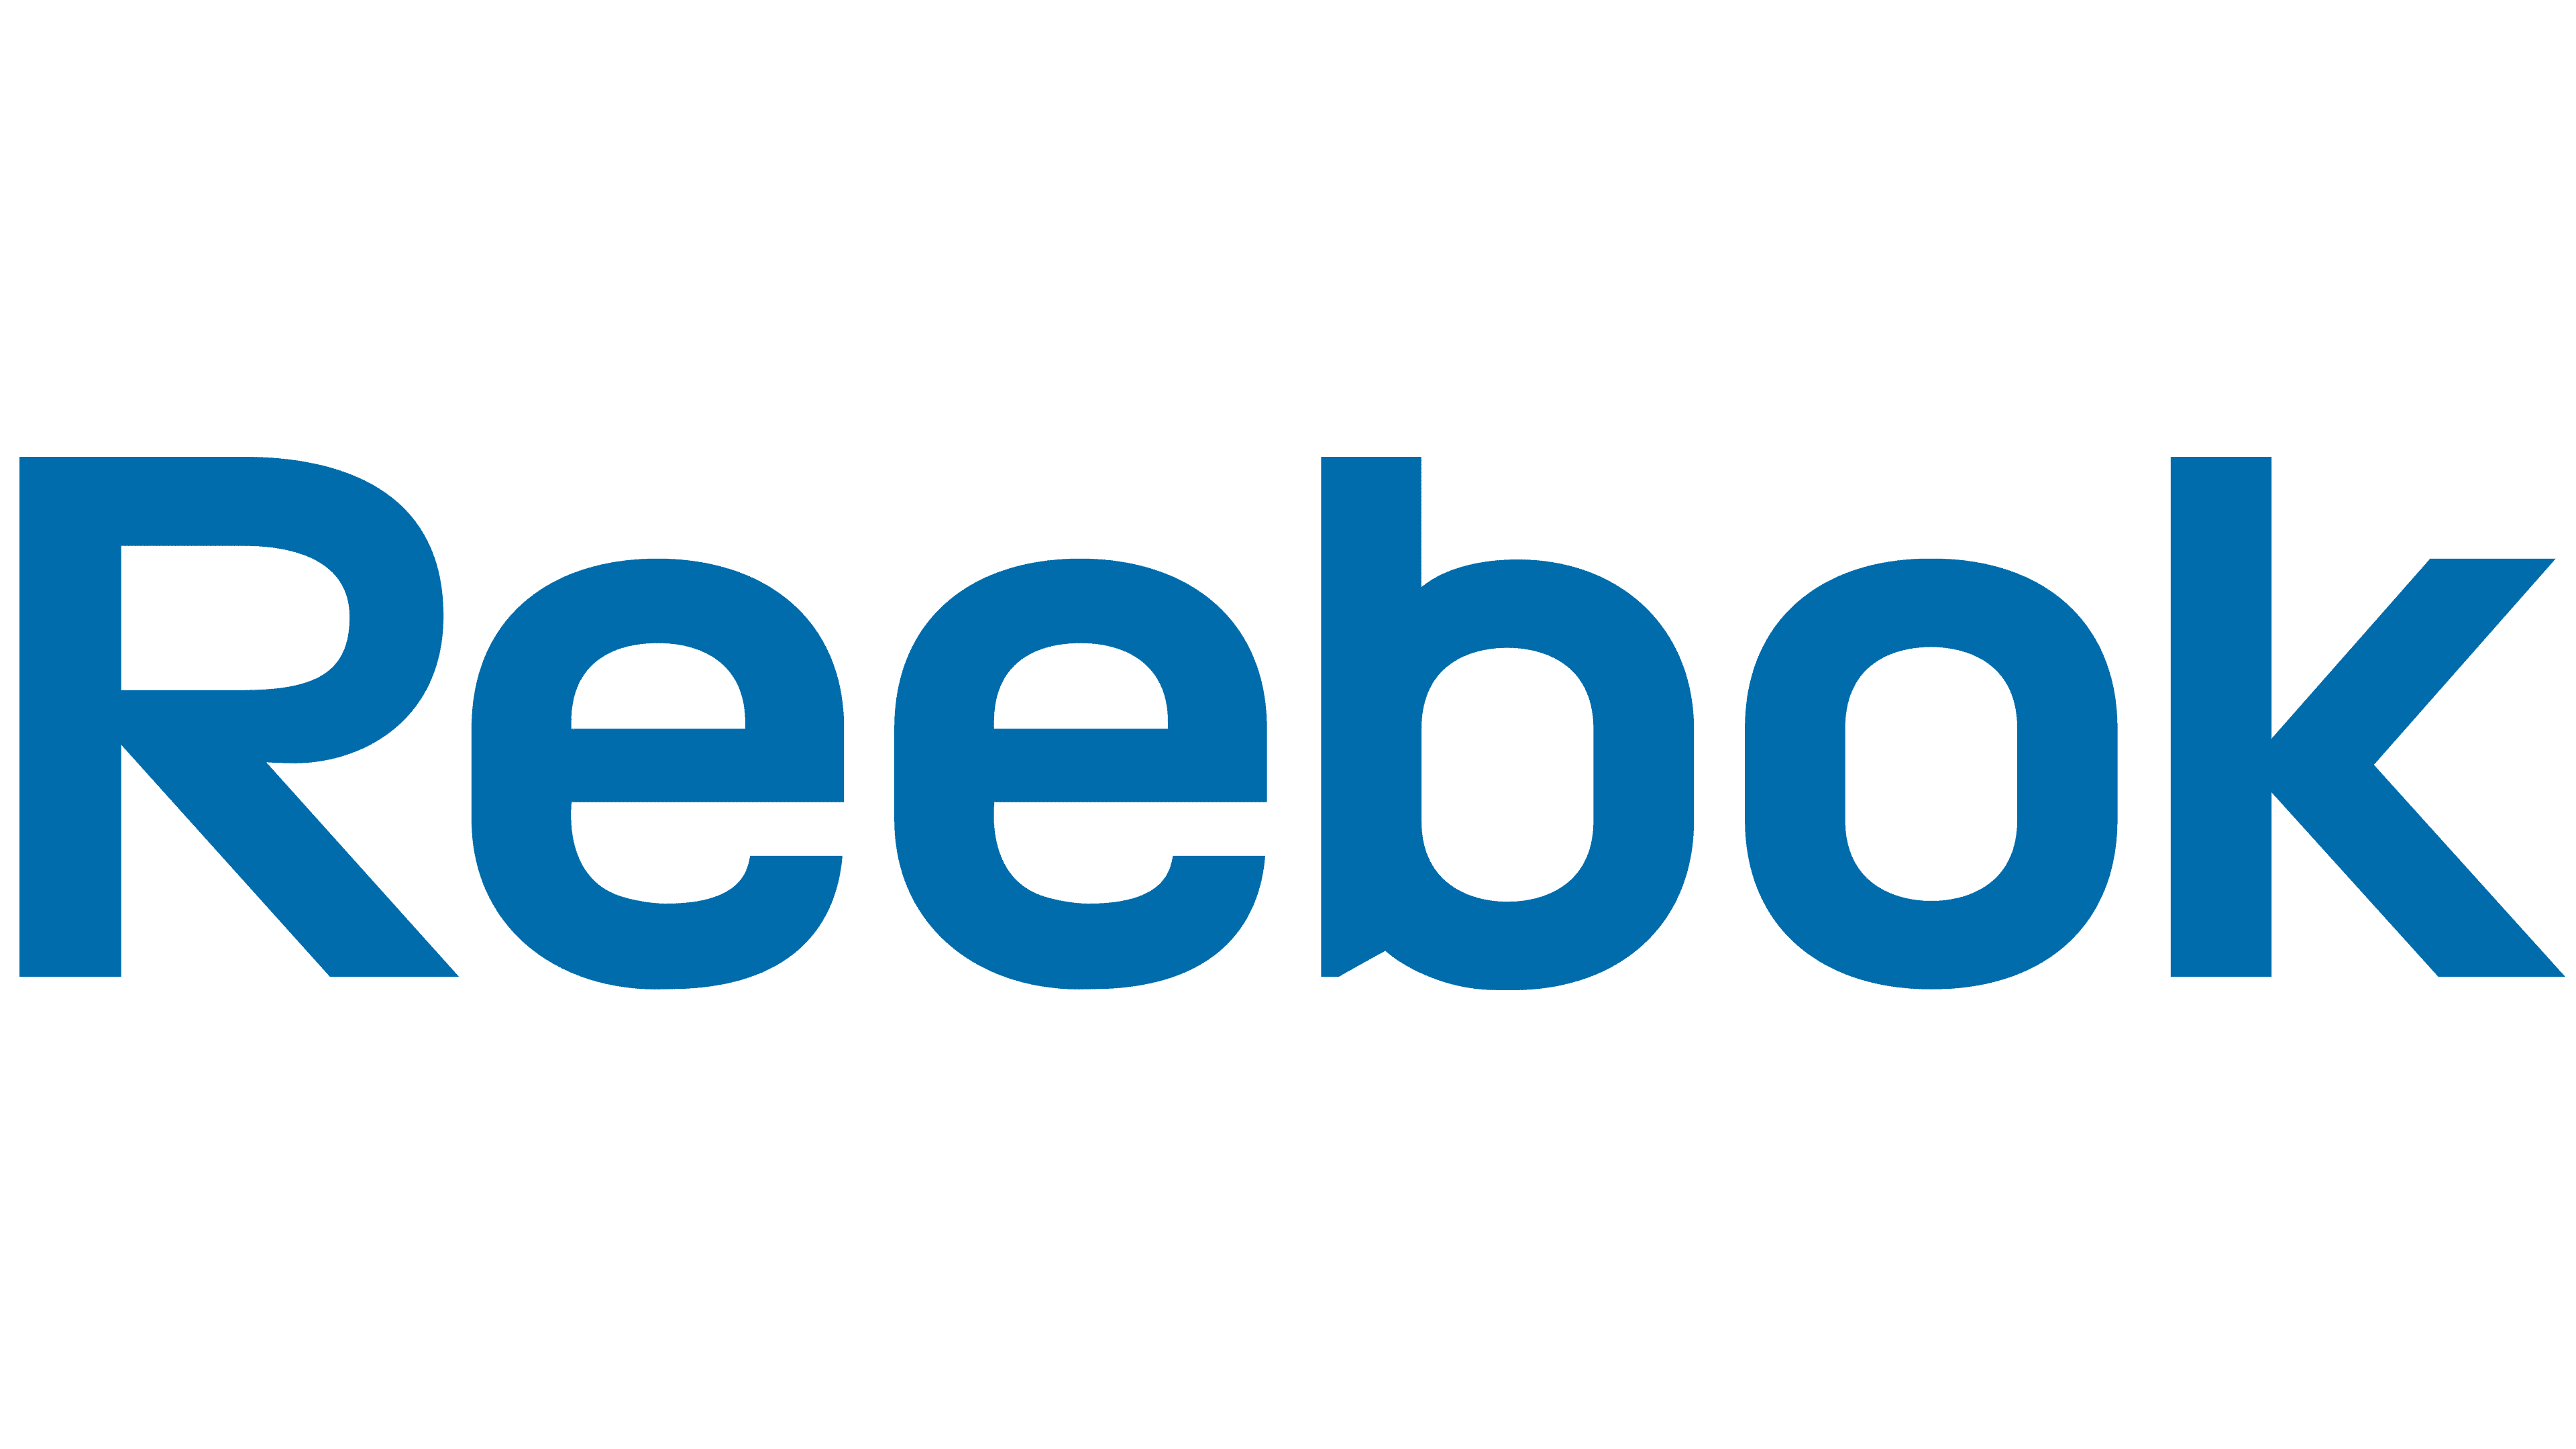 Reebok Logos | peacecommission.kdsg.gov.ng